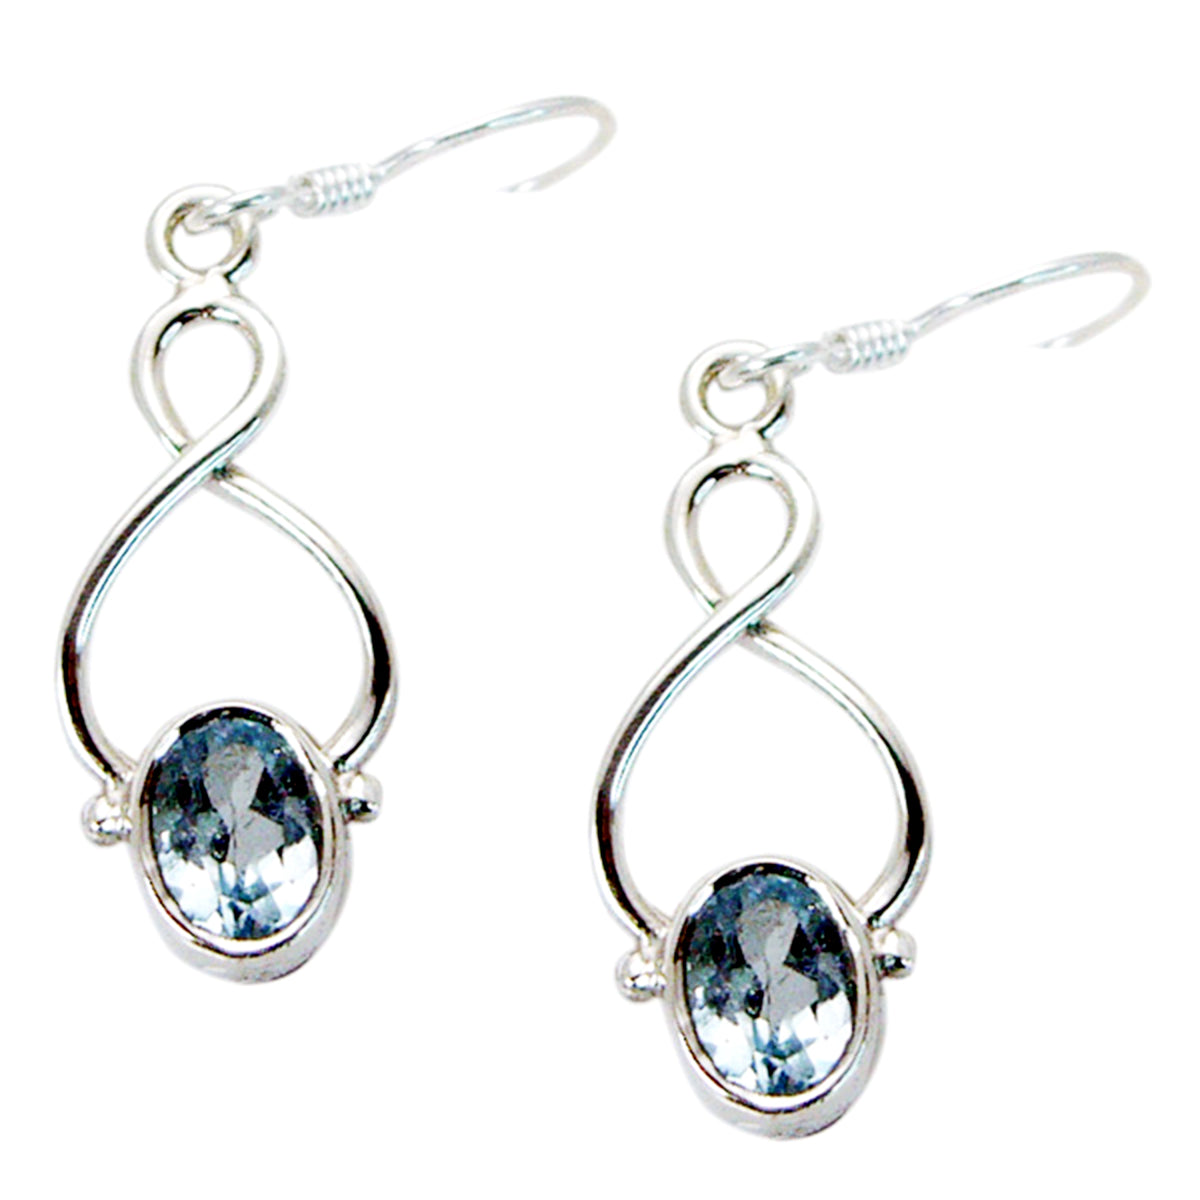 Riyo Genuine Gems oval Faceted Blue Topaz Silver Earrings thanks giving gift